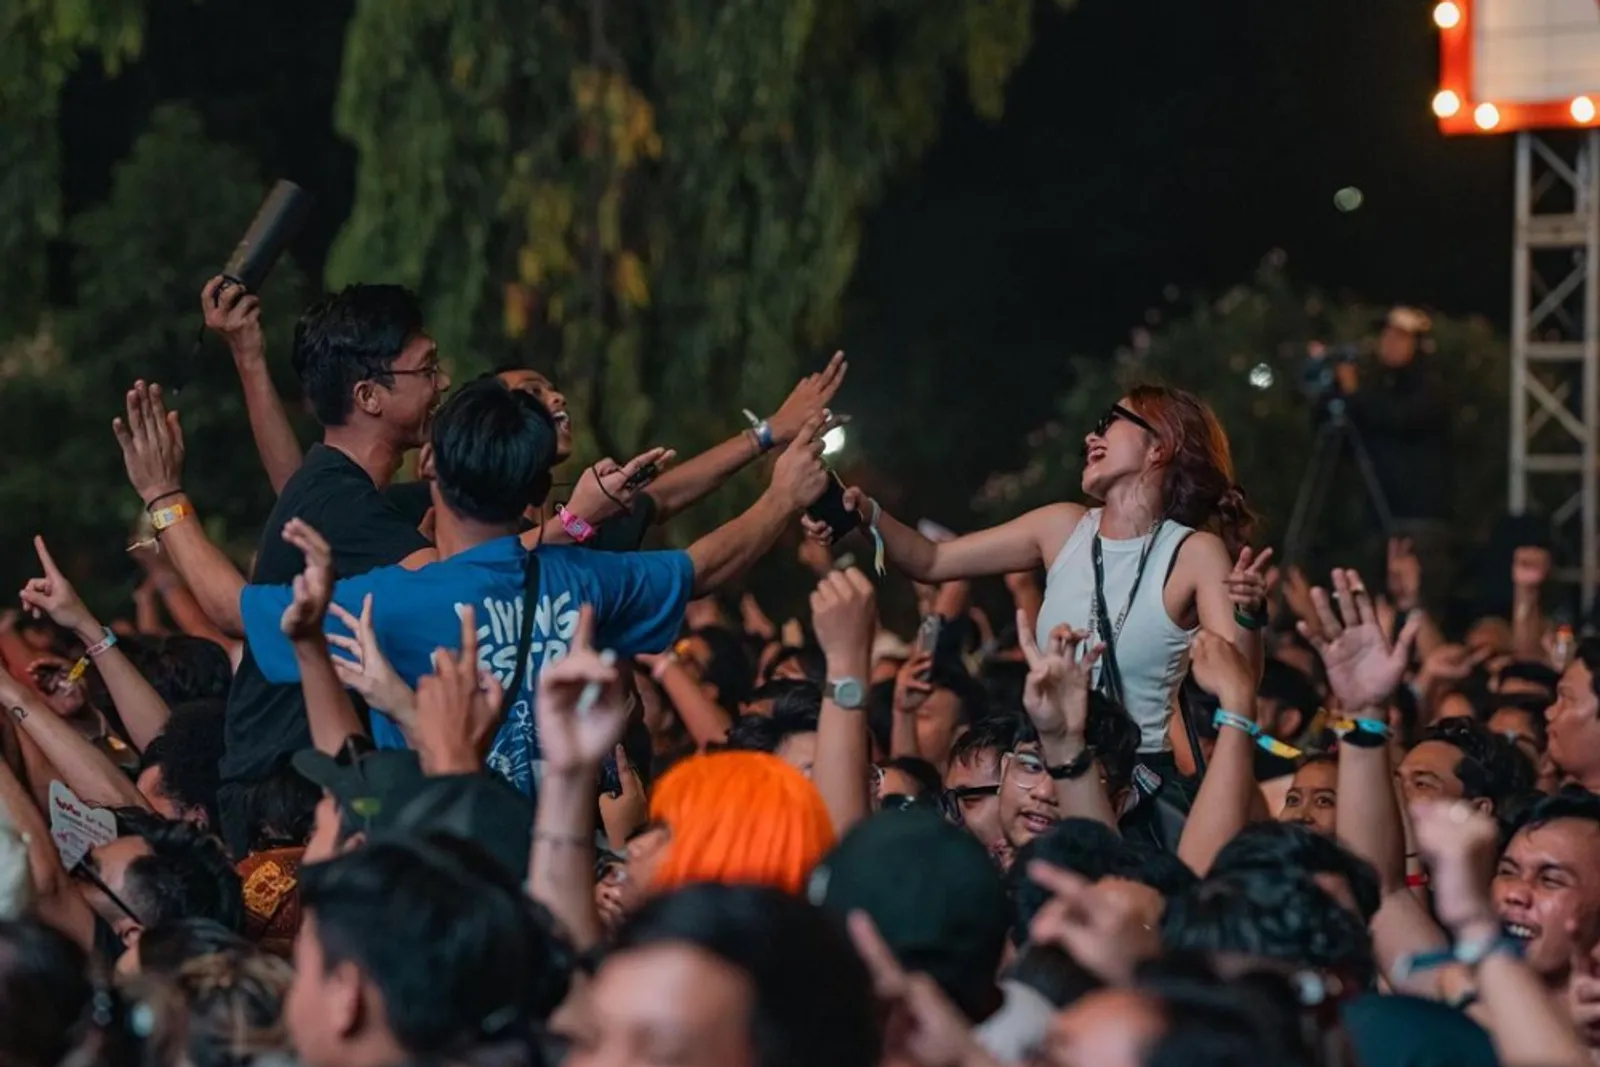 Daftar Konser Musik & Fanmeeting Jakarta 2024 (Part 2)